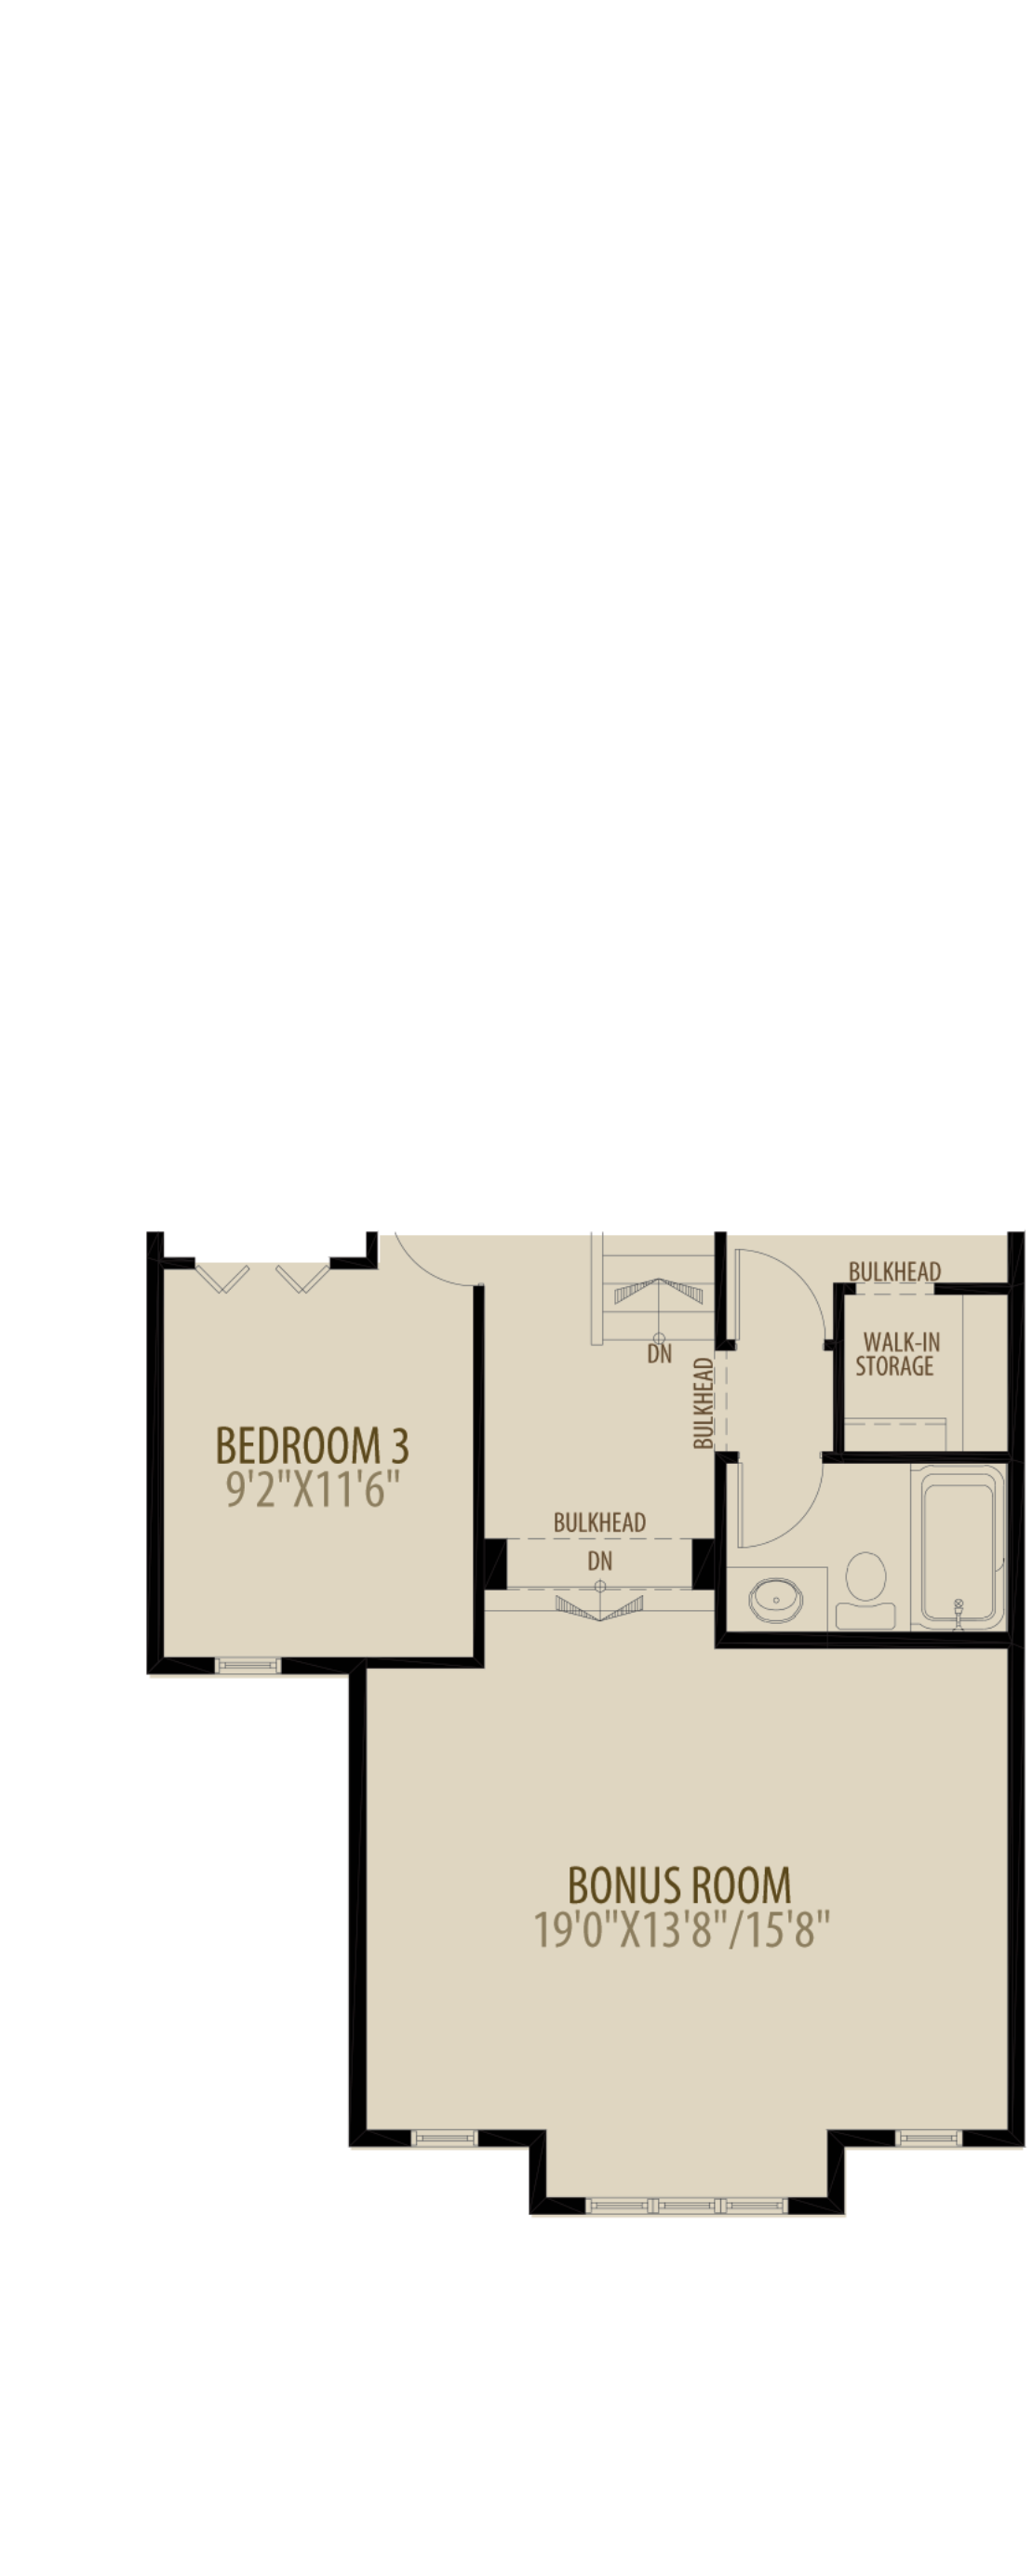 Extended Bonus Room adds 50 sq ft